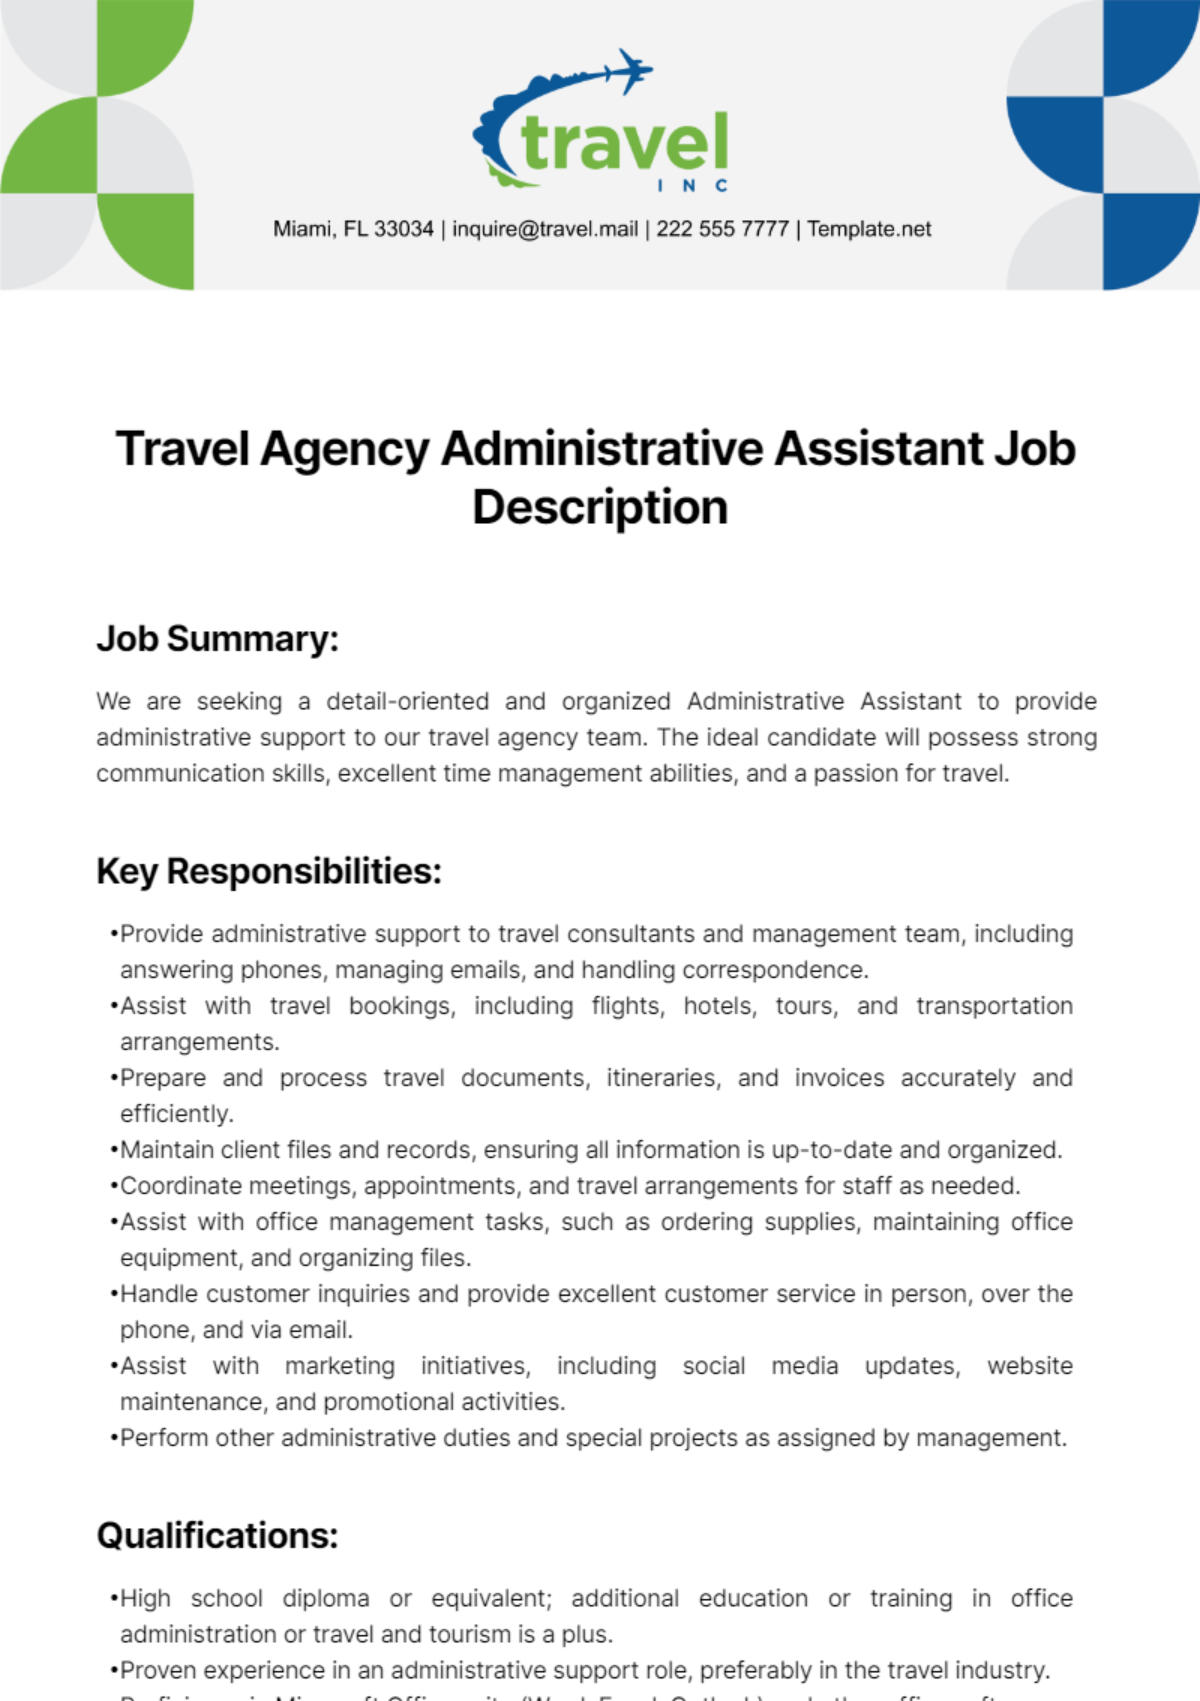 Free Travel Agency Administrative Assistant Job Description Template